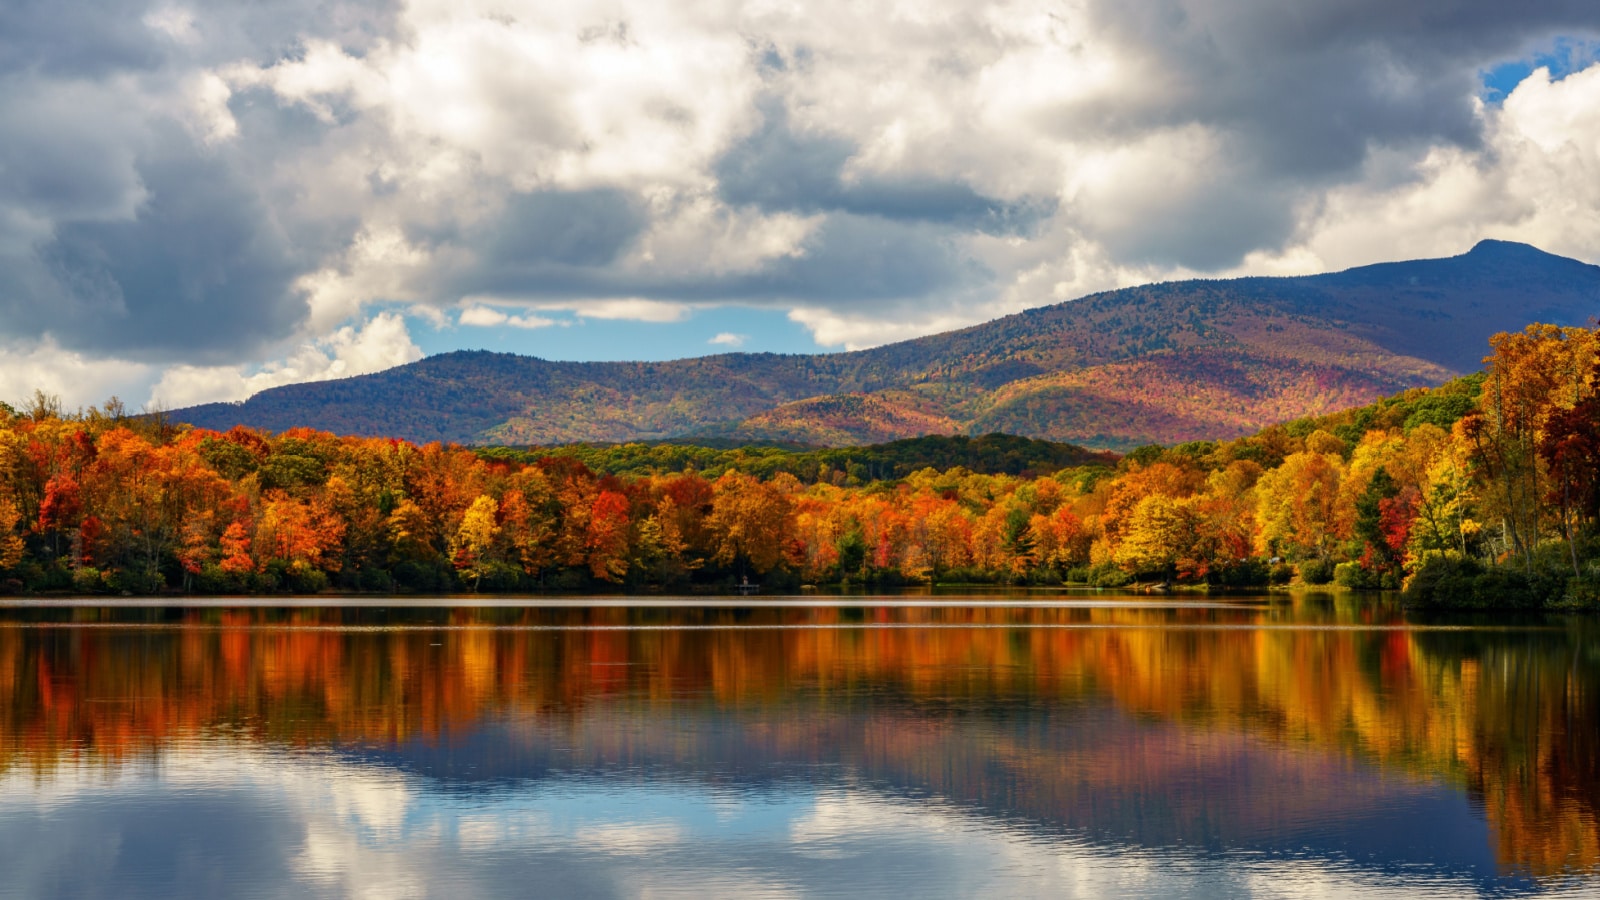 Reflective Price Lake in the Fall Blue Ridge Mountains, Appalachian Mountains, North Carolina